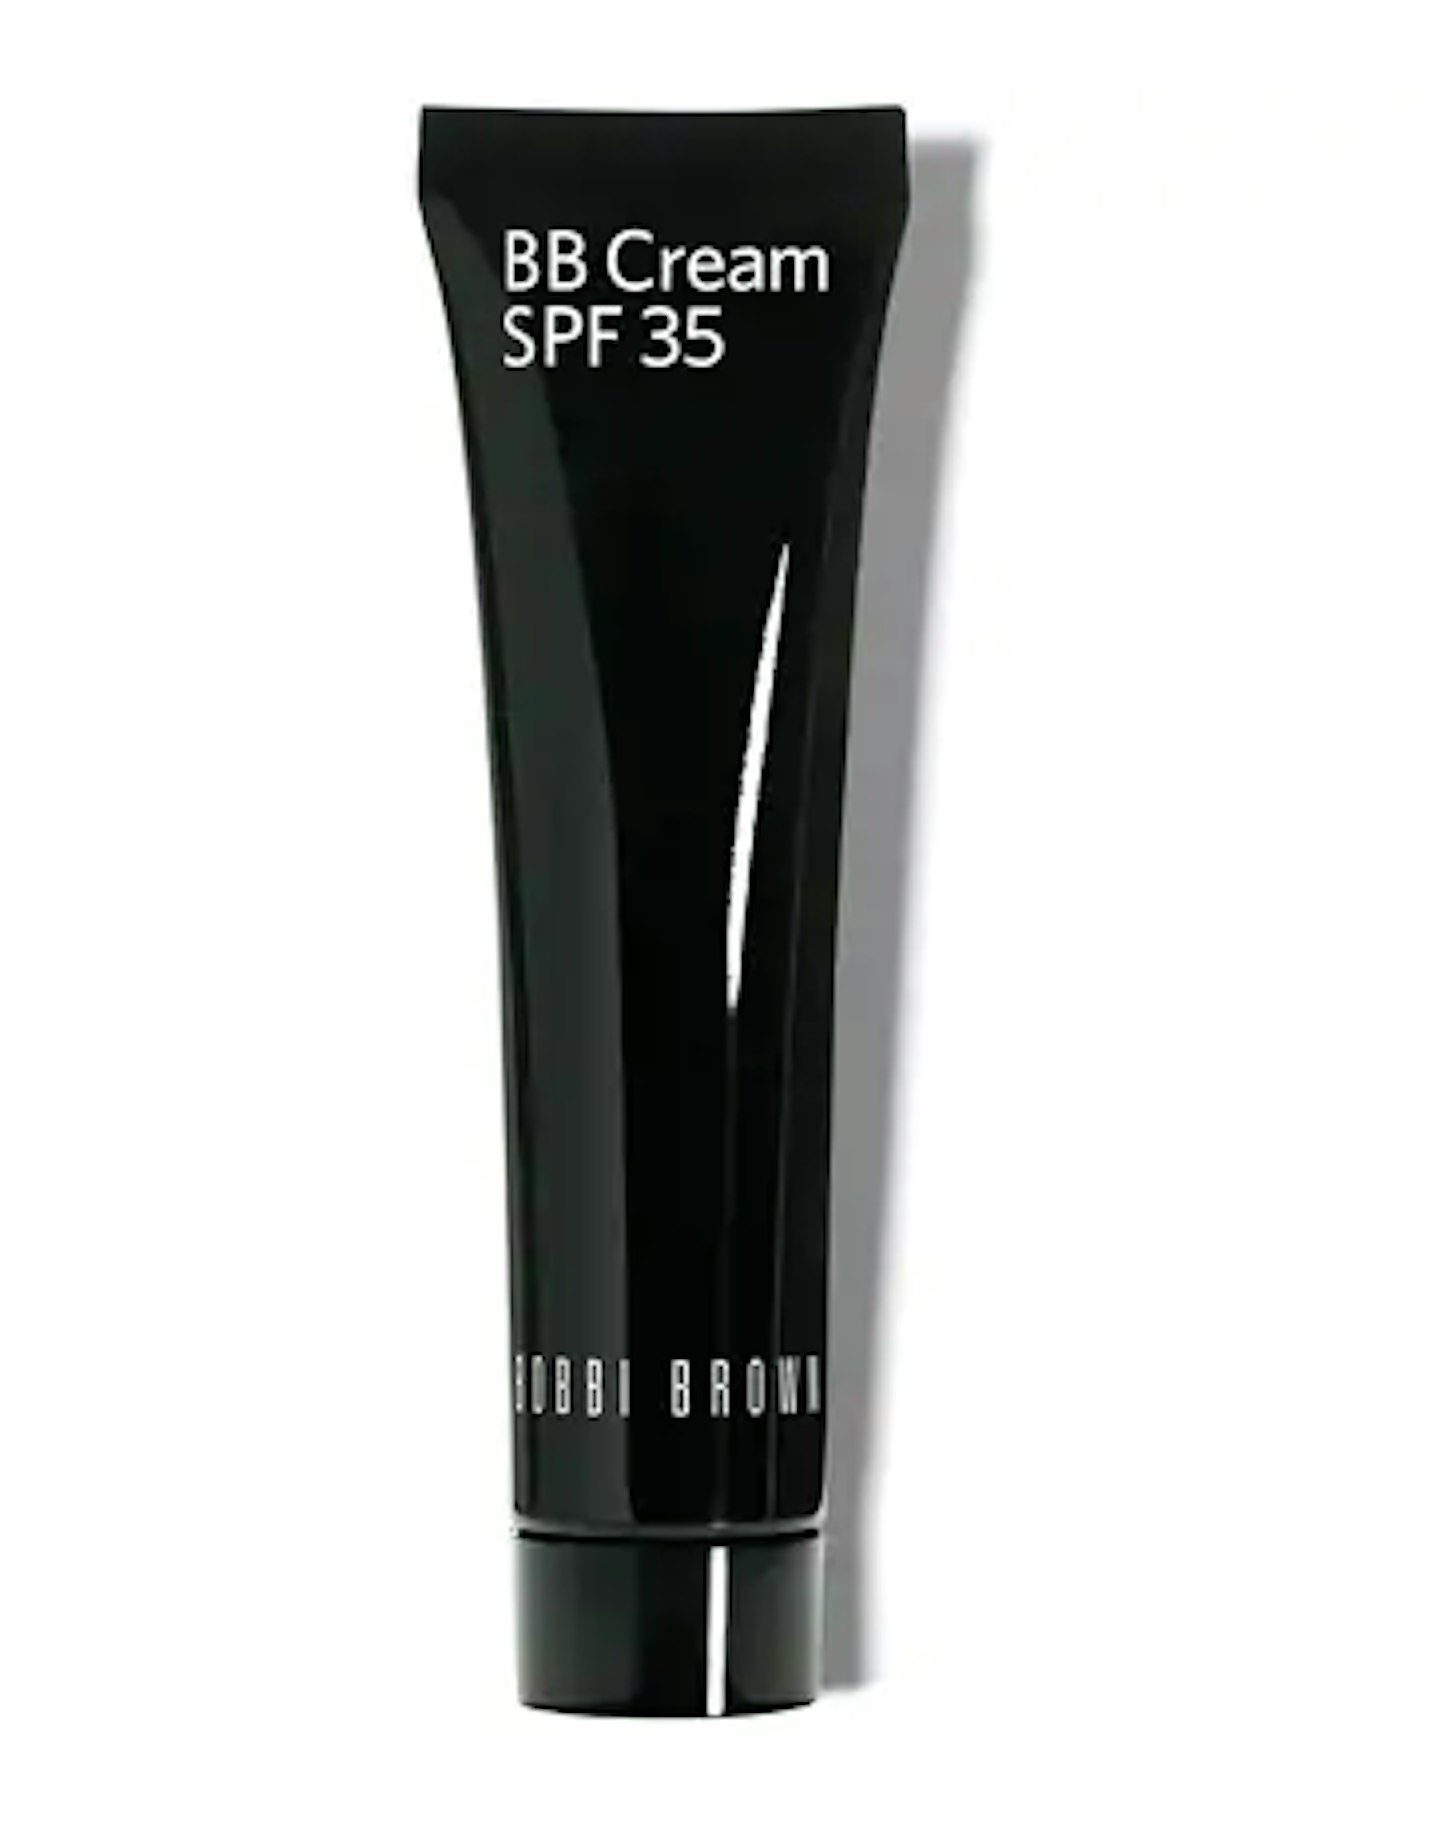 Bobbi Brown BB Cream SPF 35, u00a332, Bobbi Brown